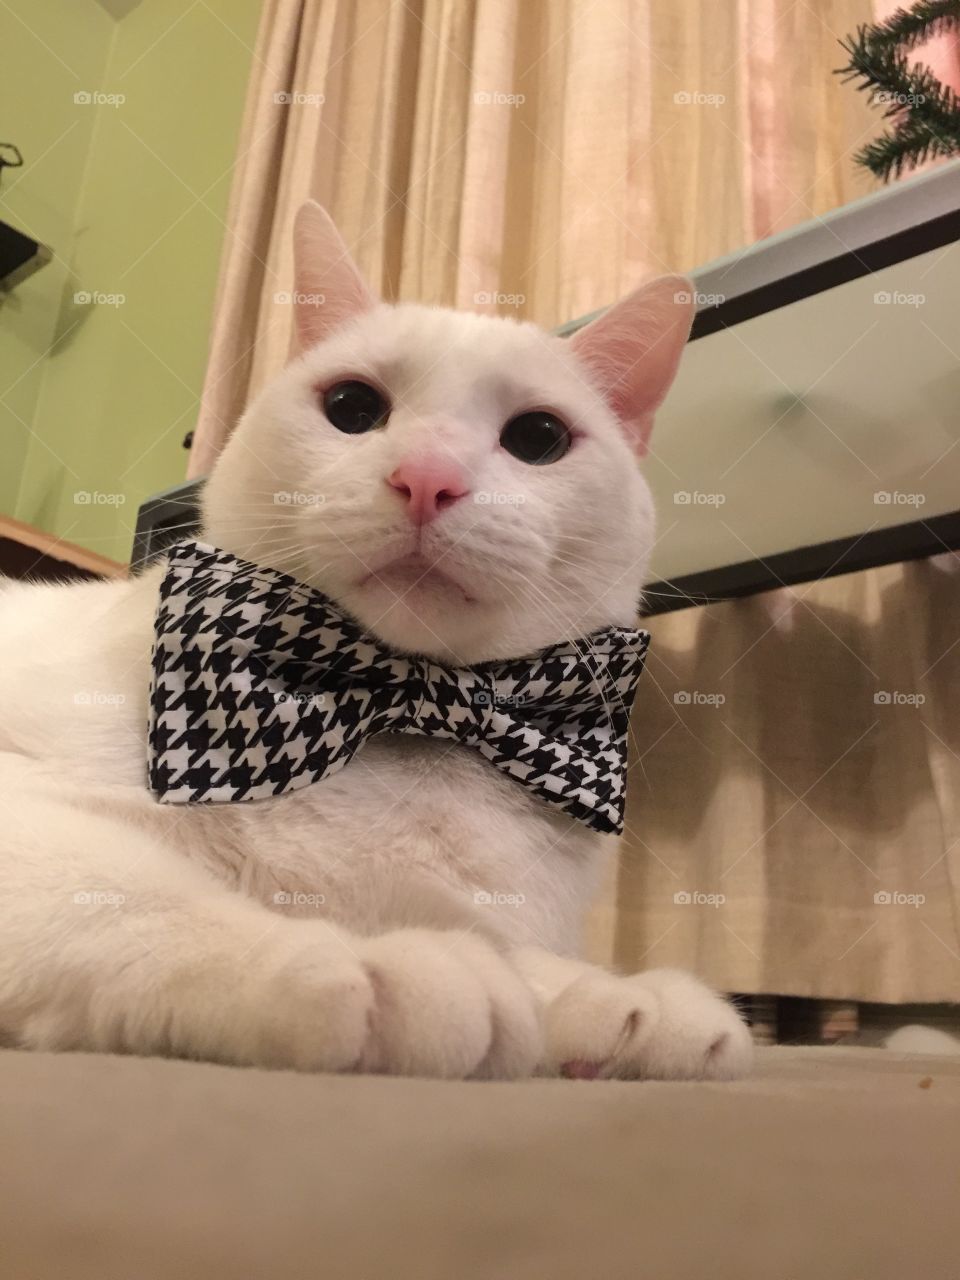 Bow tie kitty cat